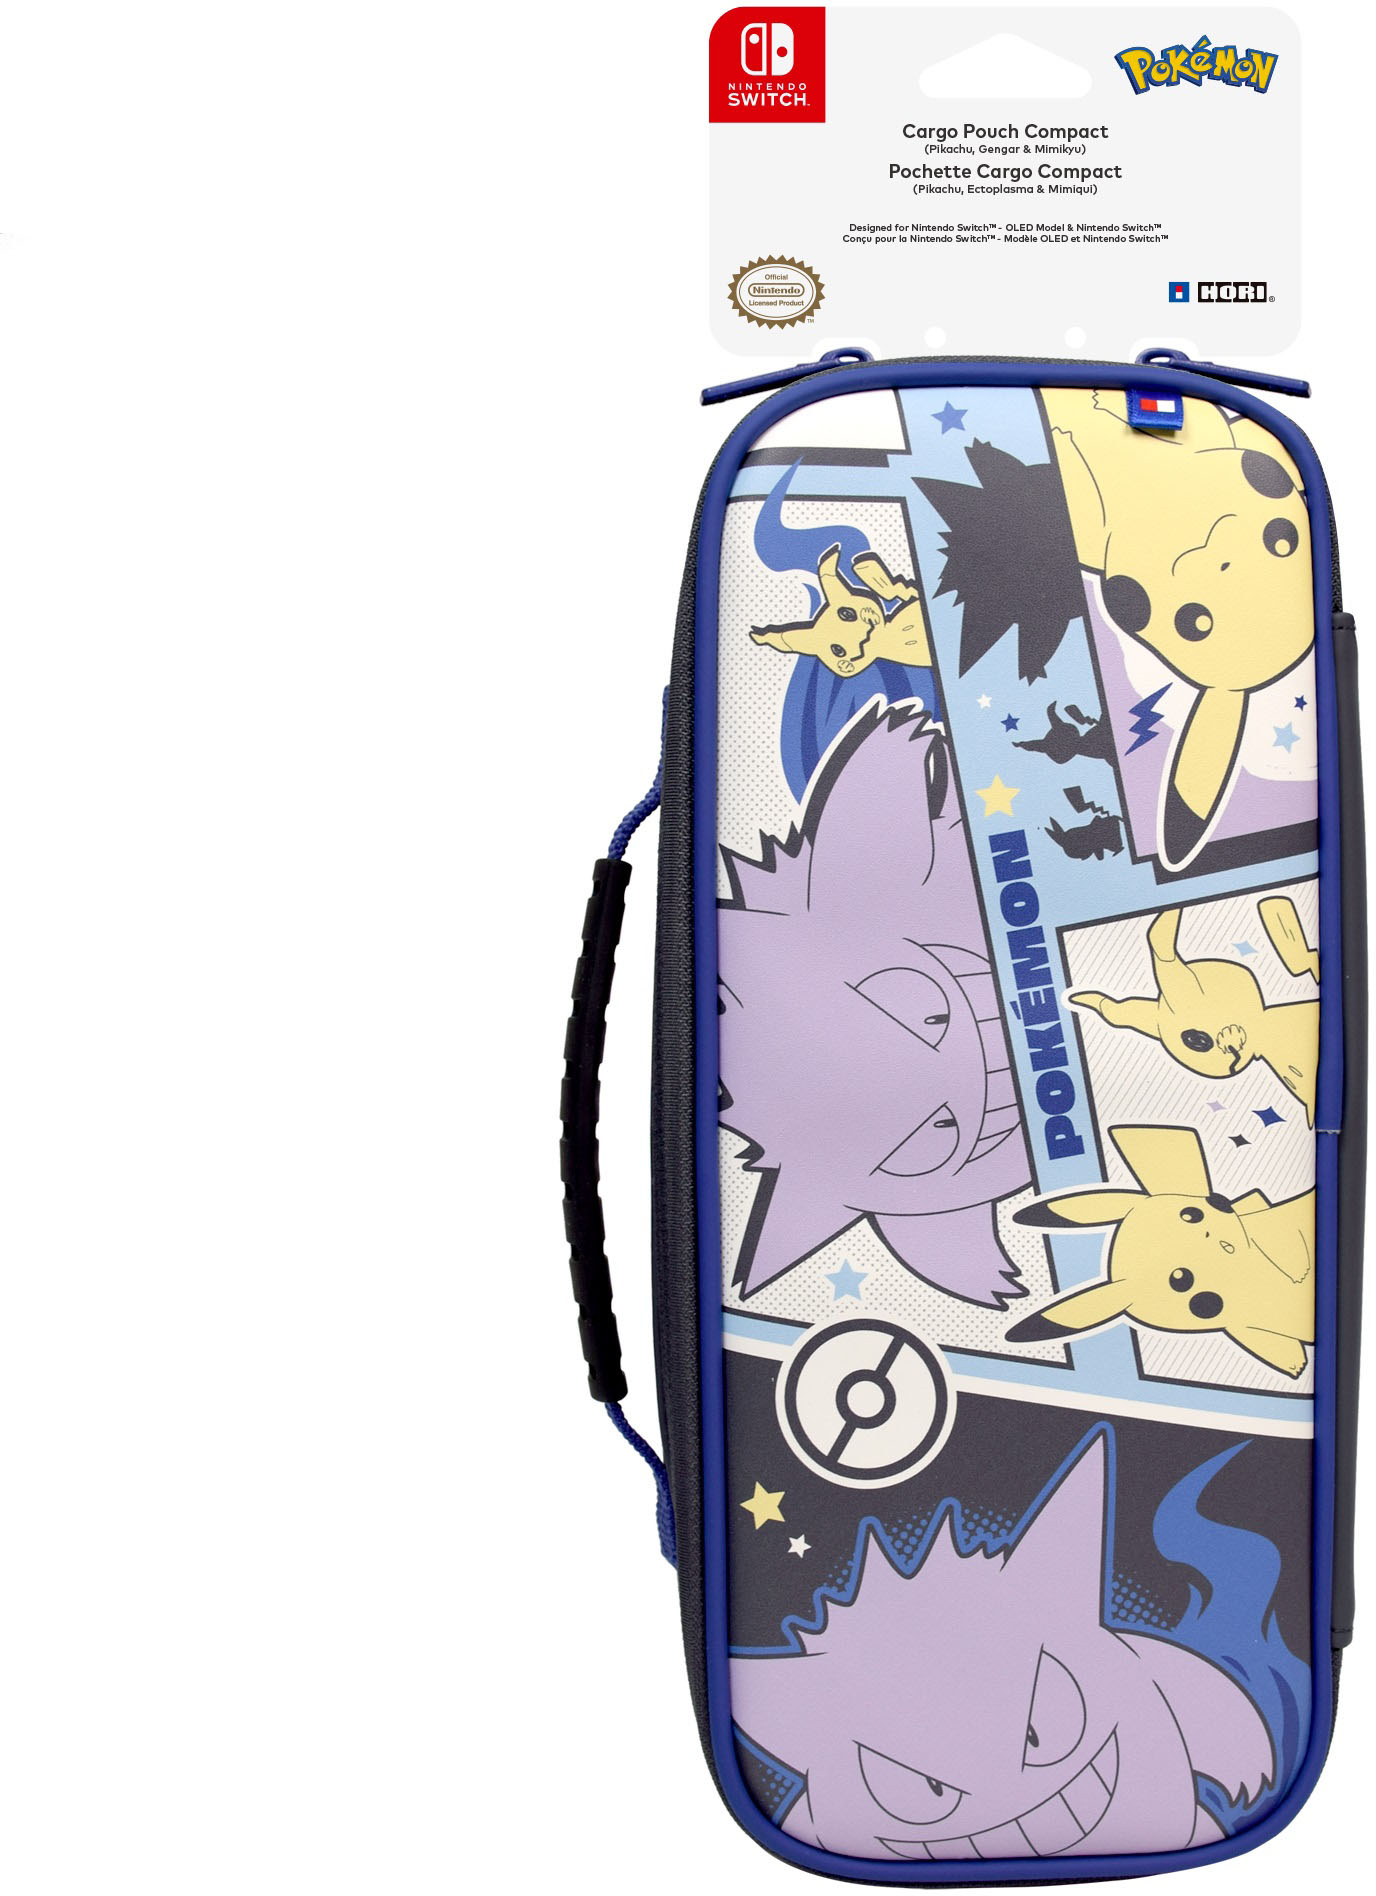 Image of Hori - Cargo Pouch Compact for Nintendo Switch - Pikachu, Gengar & Mimikyu